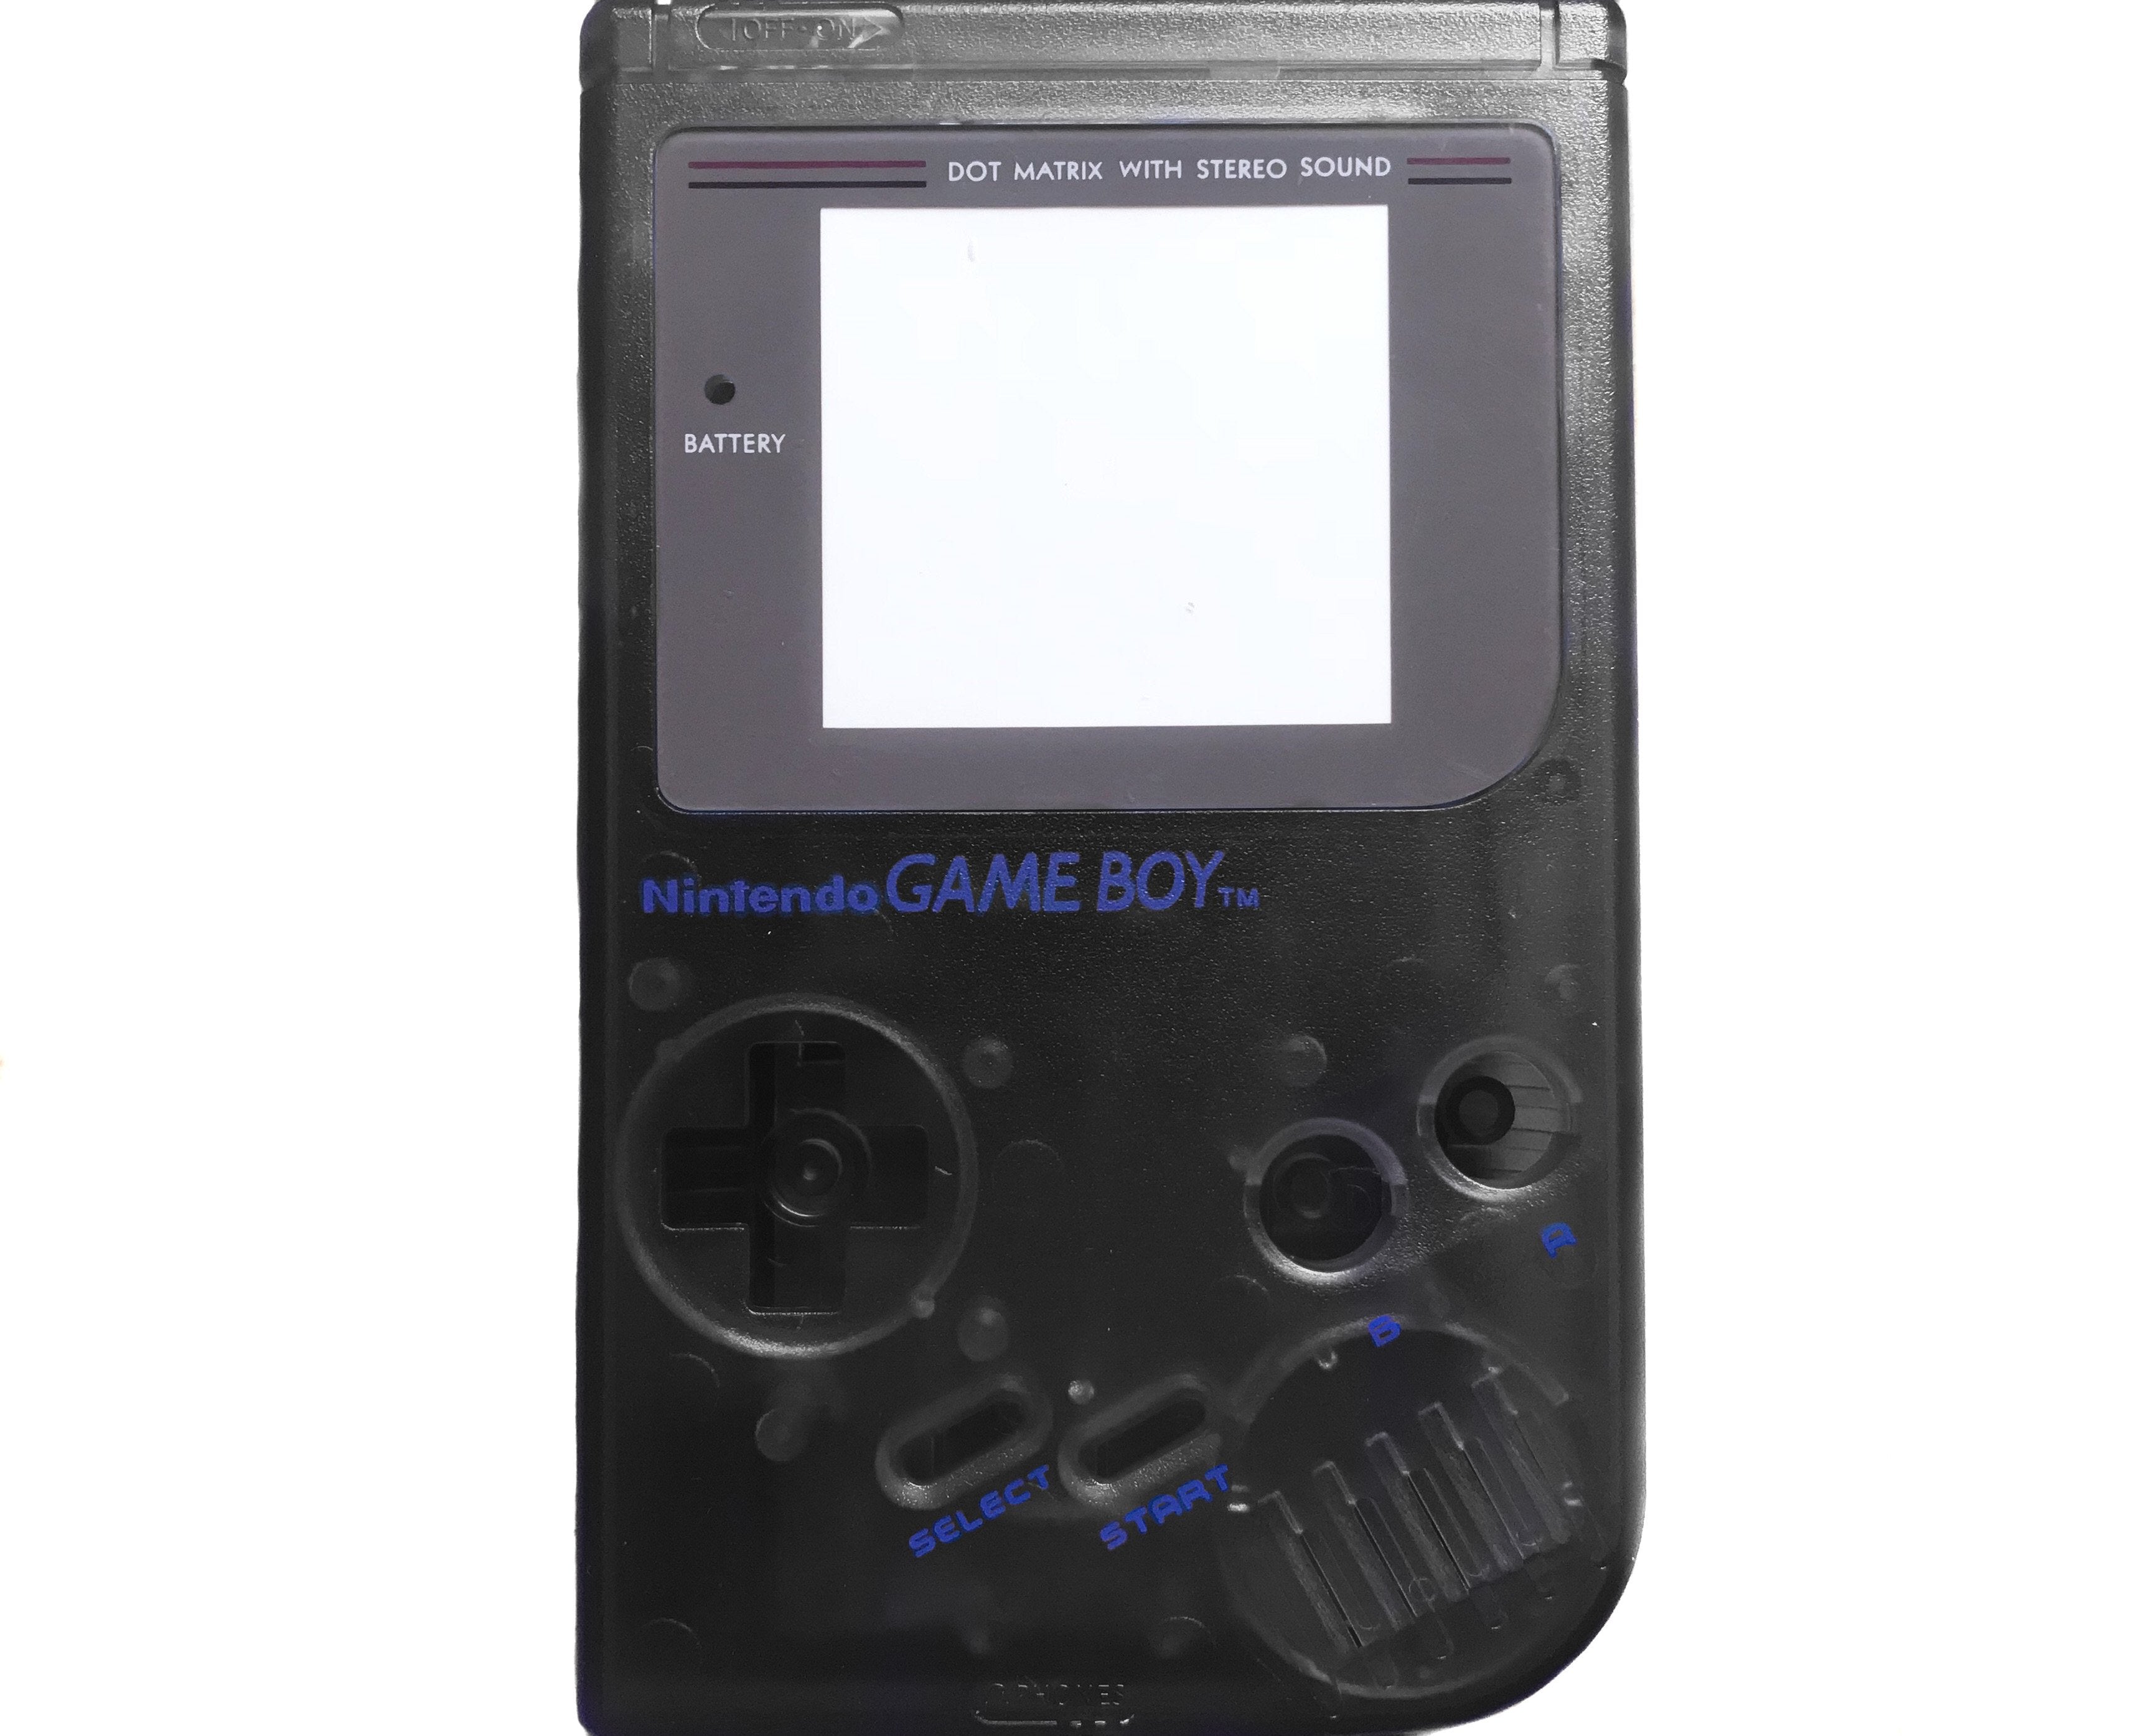 Game Boy Original DMG IPS Full Mod Kit